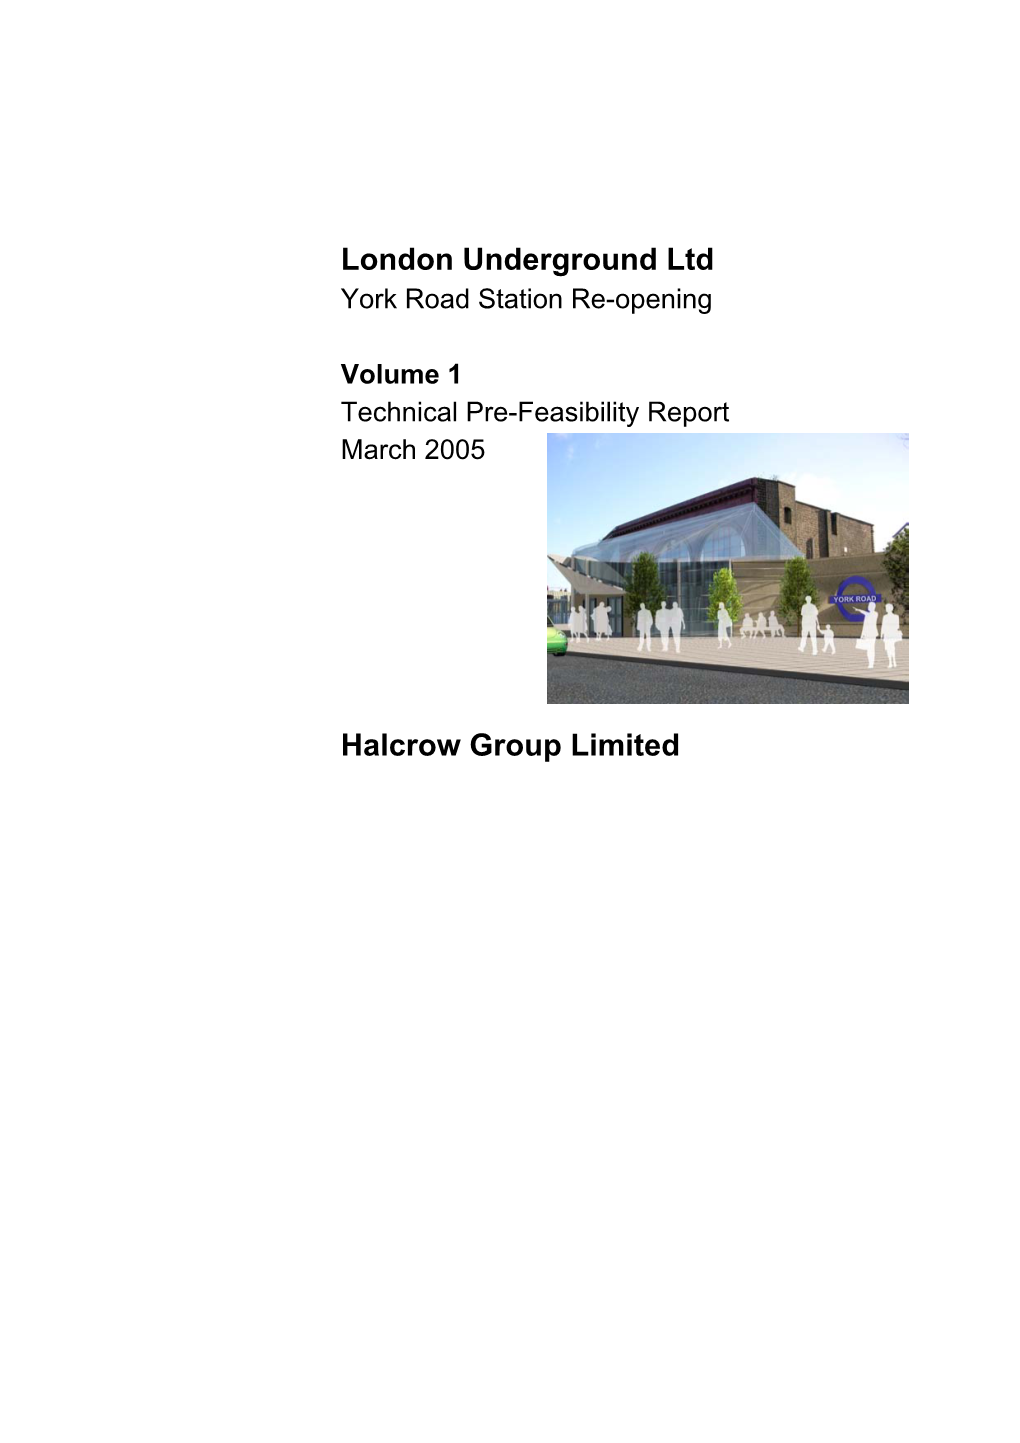 London Underground Ltd Halcrow Group Limited